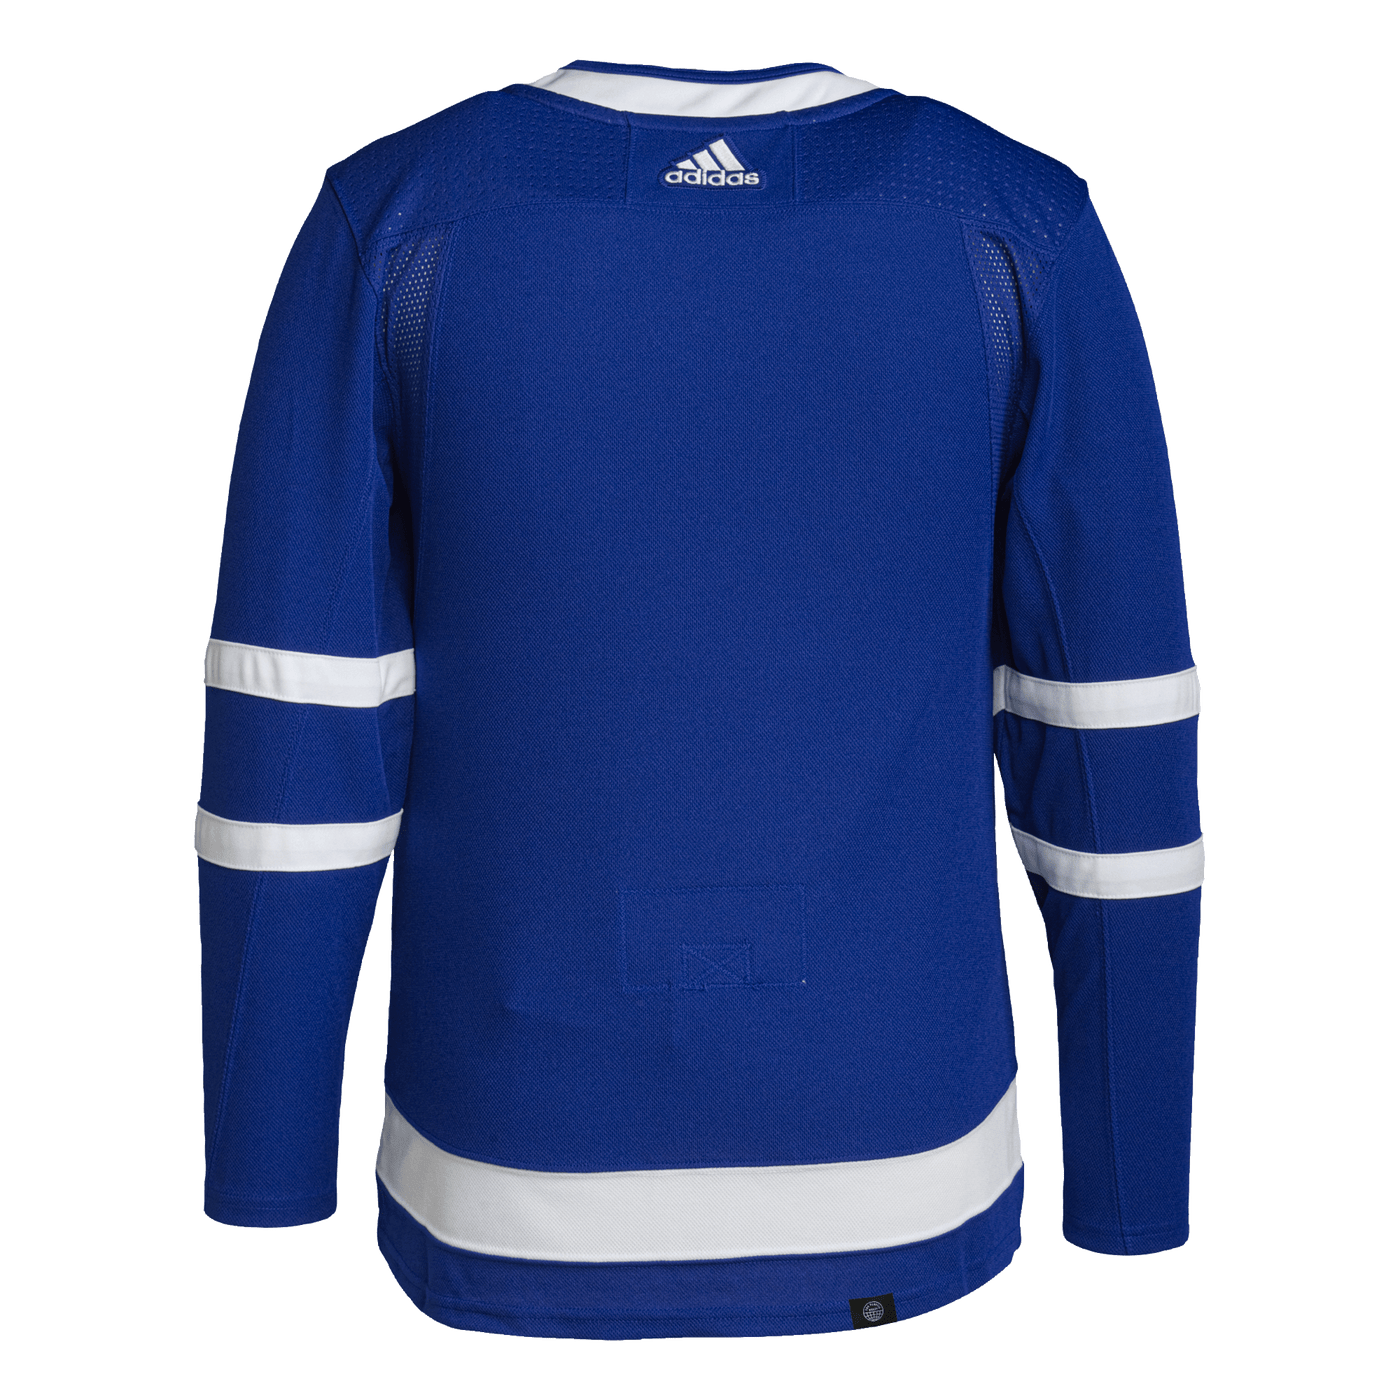 Toronto Maple Leafs Home Adidas PrimeGreen Senior Jersey